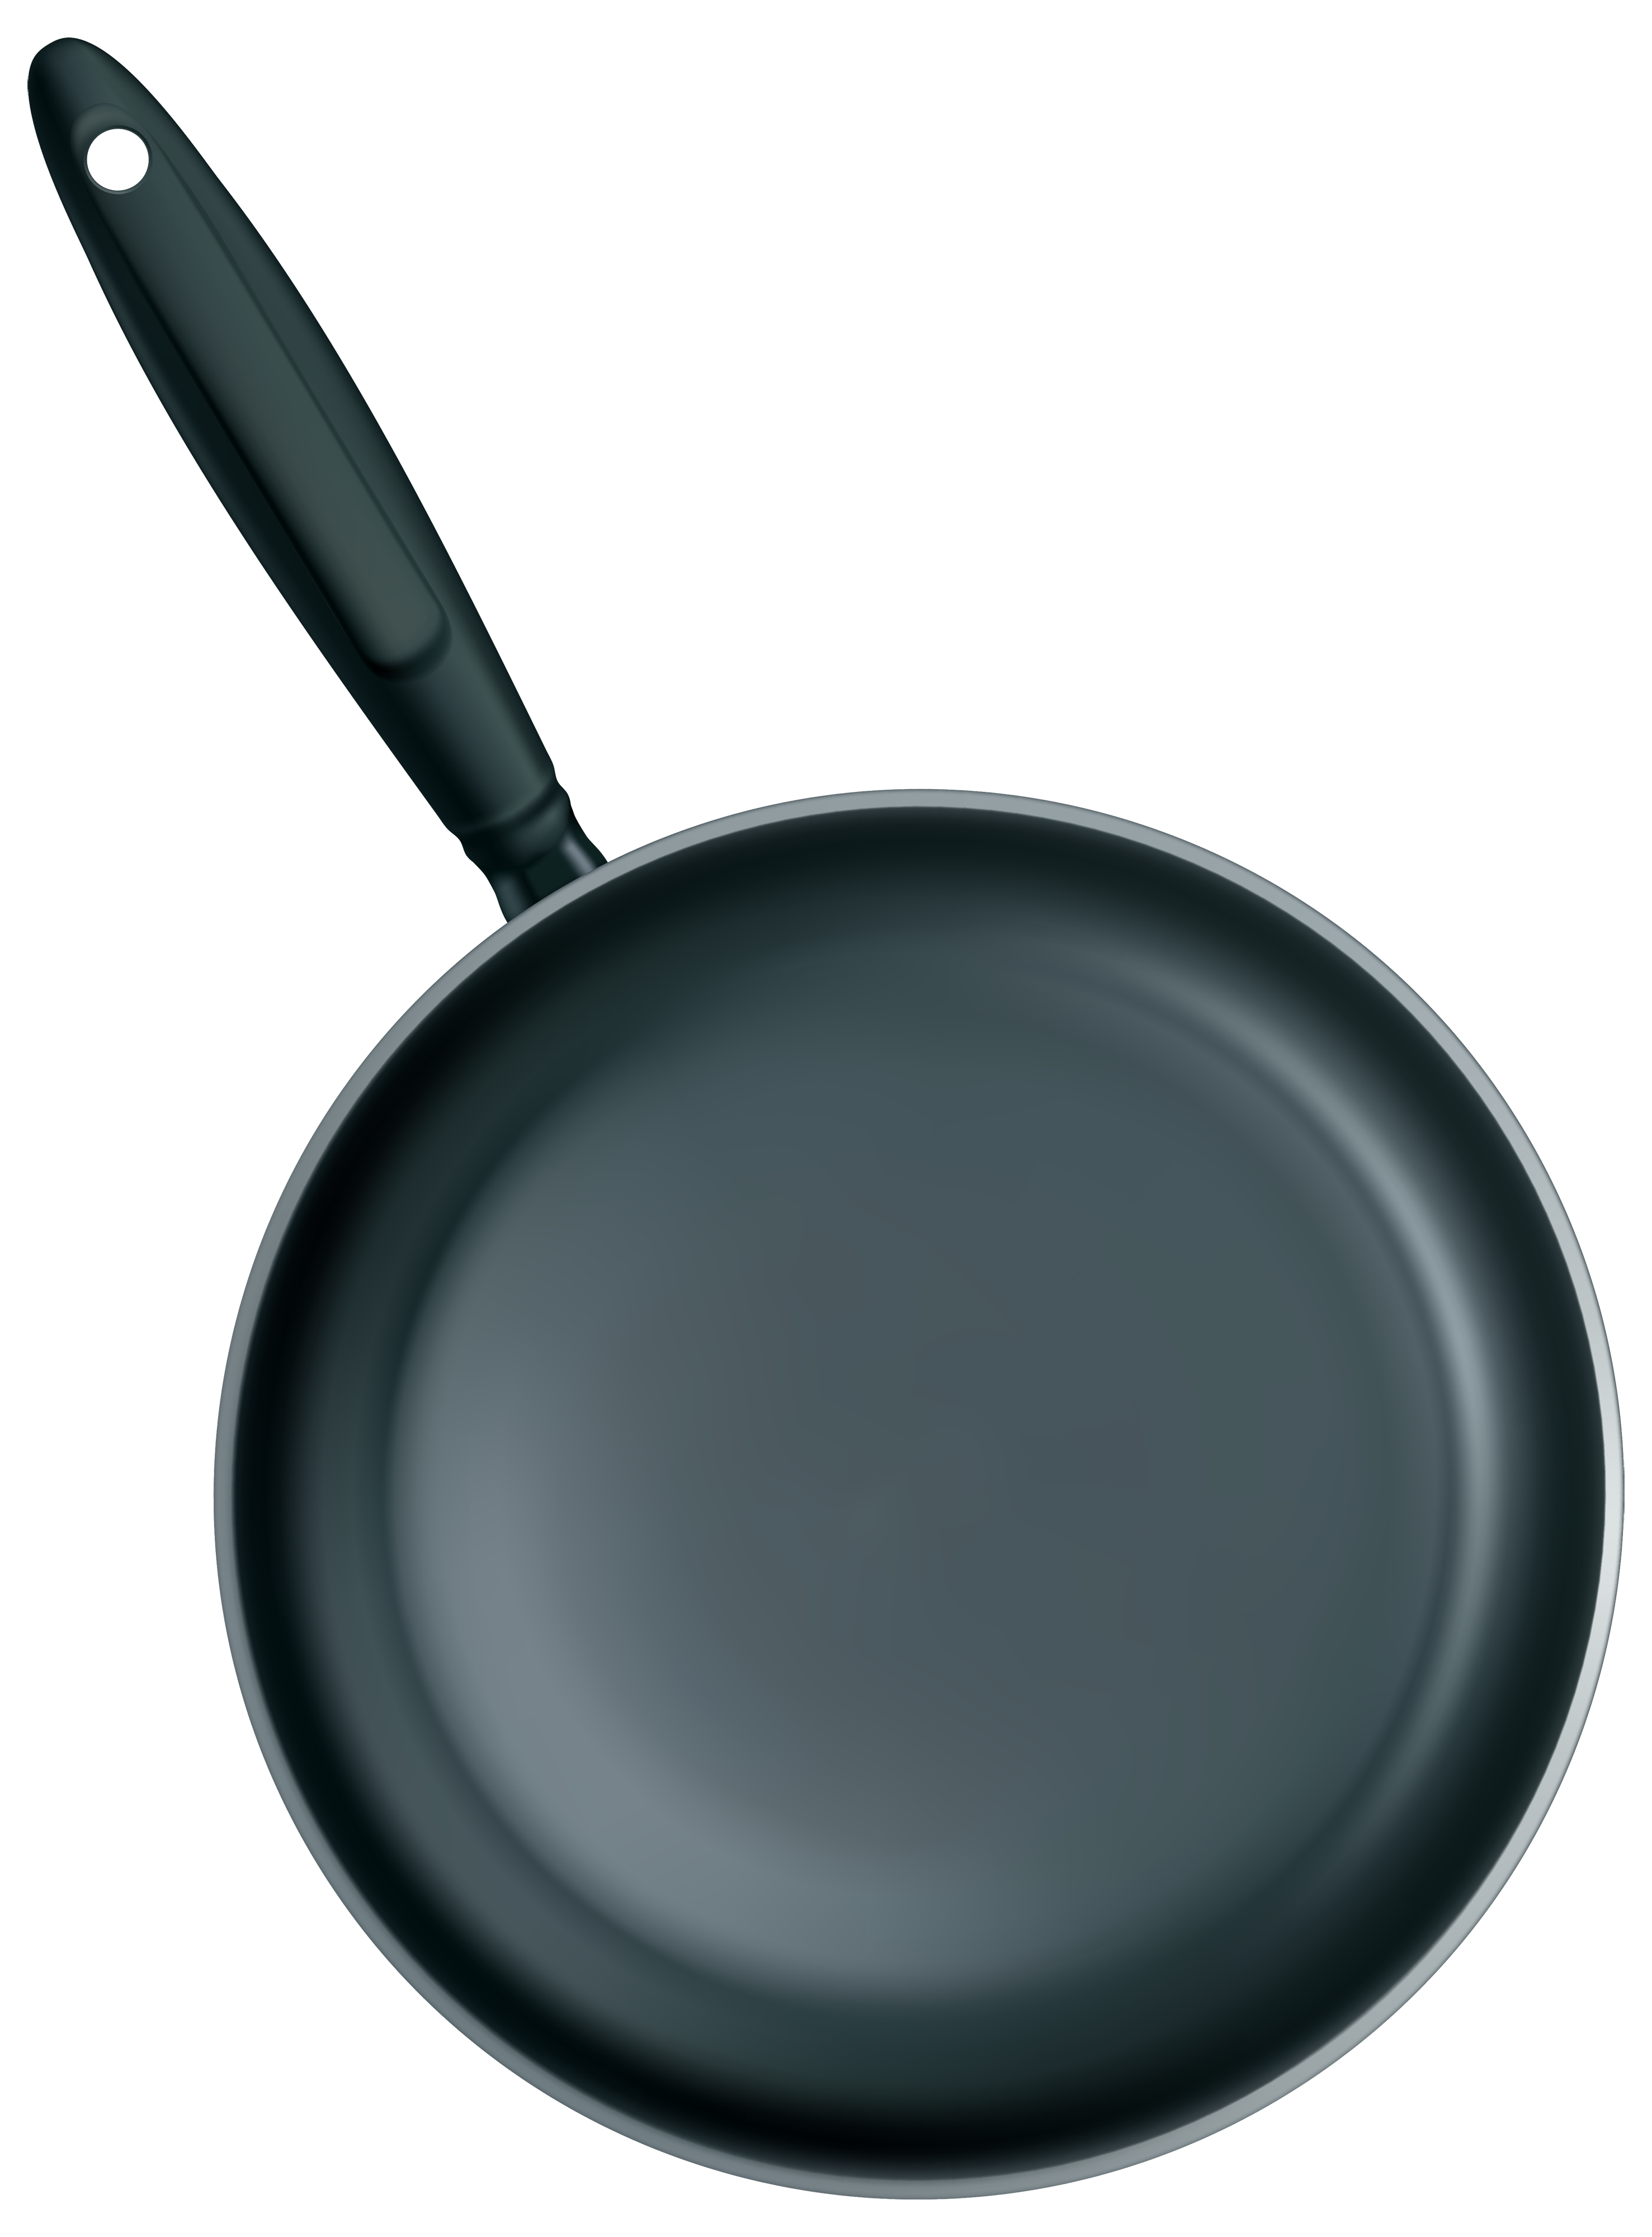 Black Frying Pan PNG Clipart - Best WEB Clipart